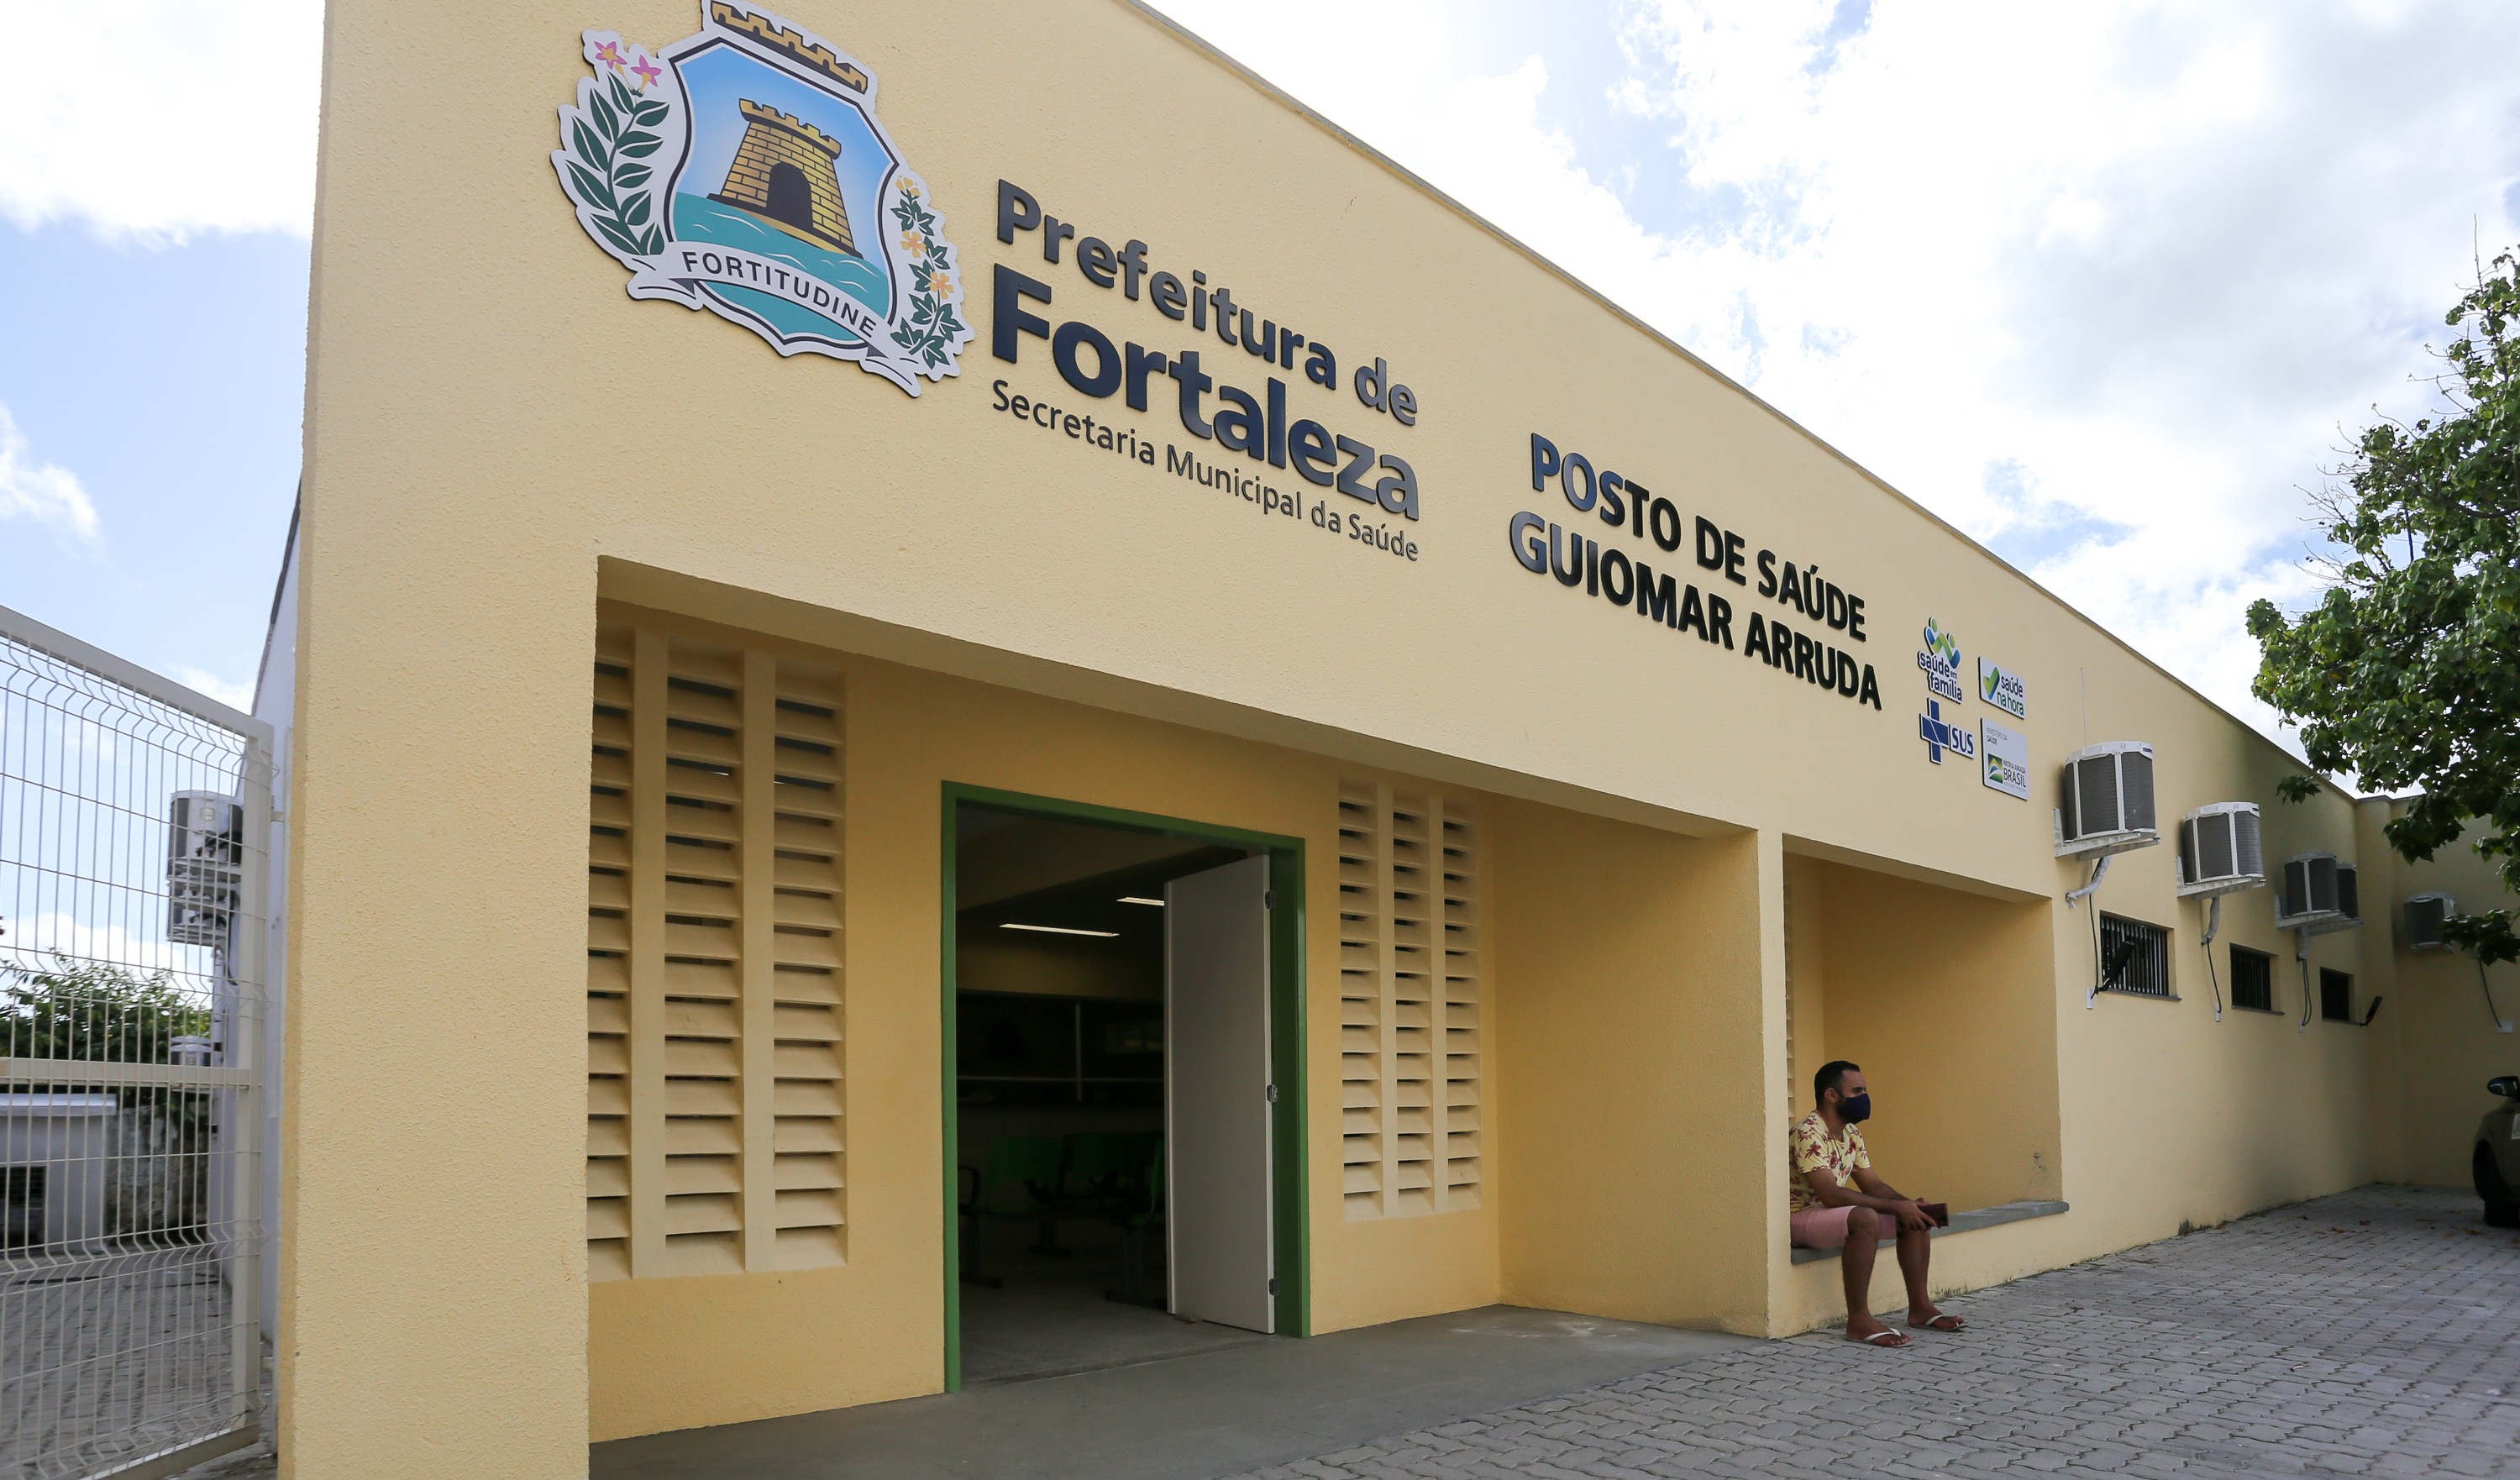 Fóruns Territoriais de Fortaleza - Fórun Territorial Cristo Redentor e Pirambu - Prefeitura de Fortaleza conclui reforma e ampliação do Posto de Saúde Guiomar Arruda